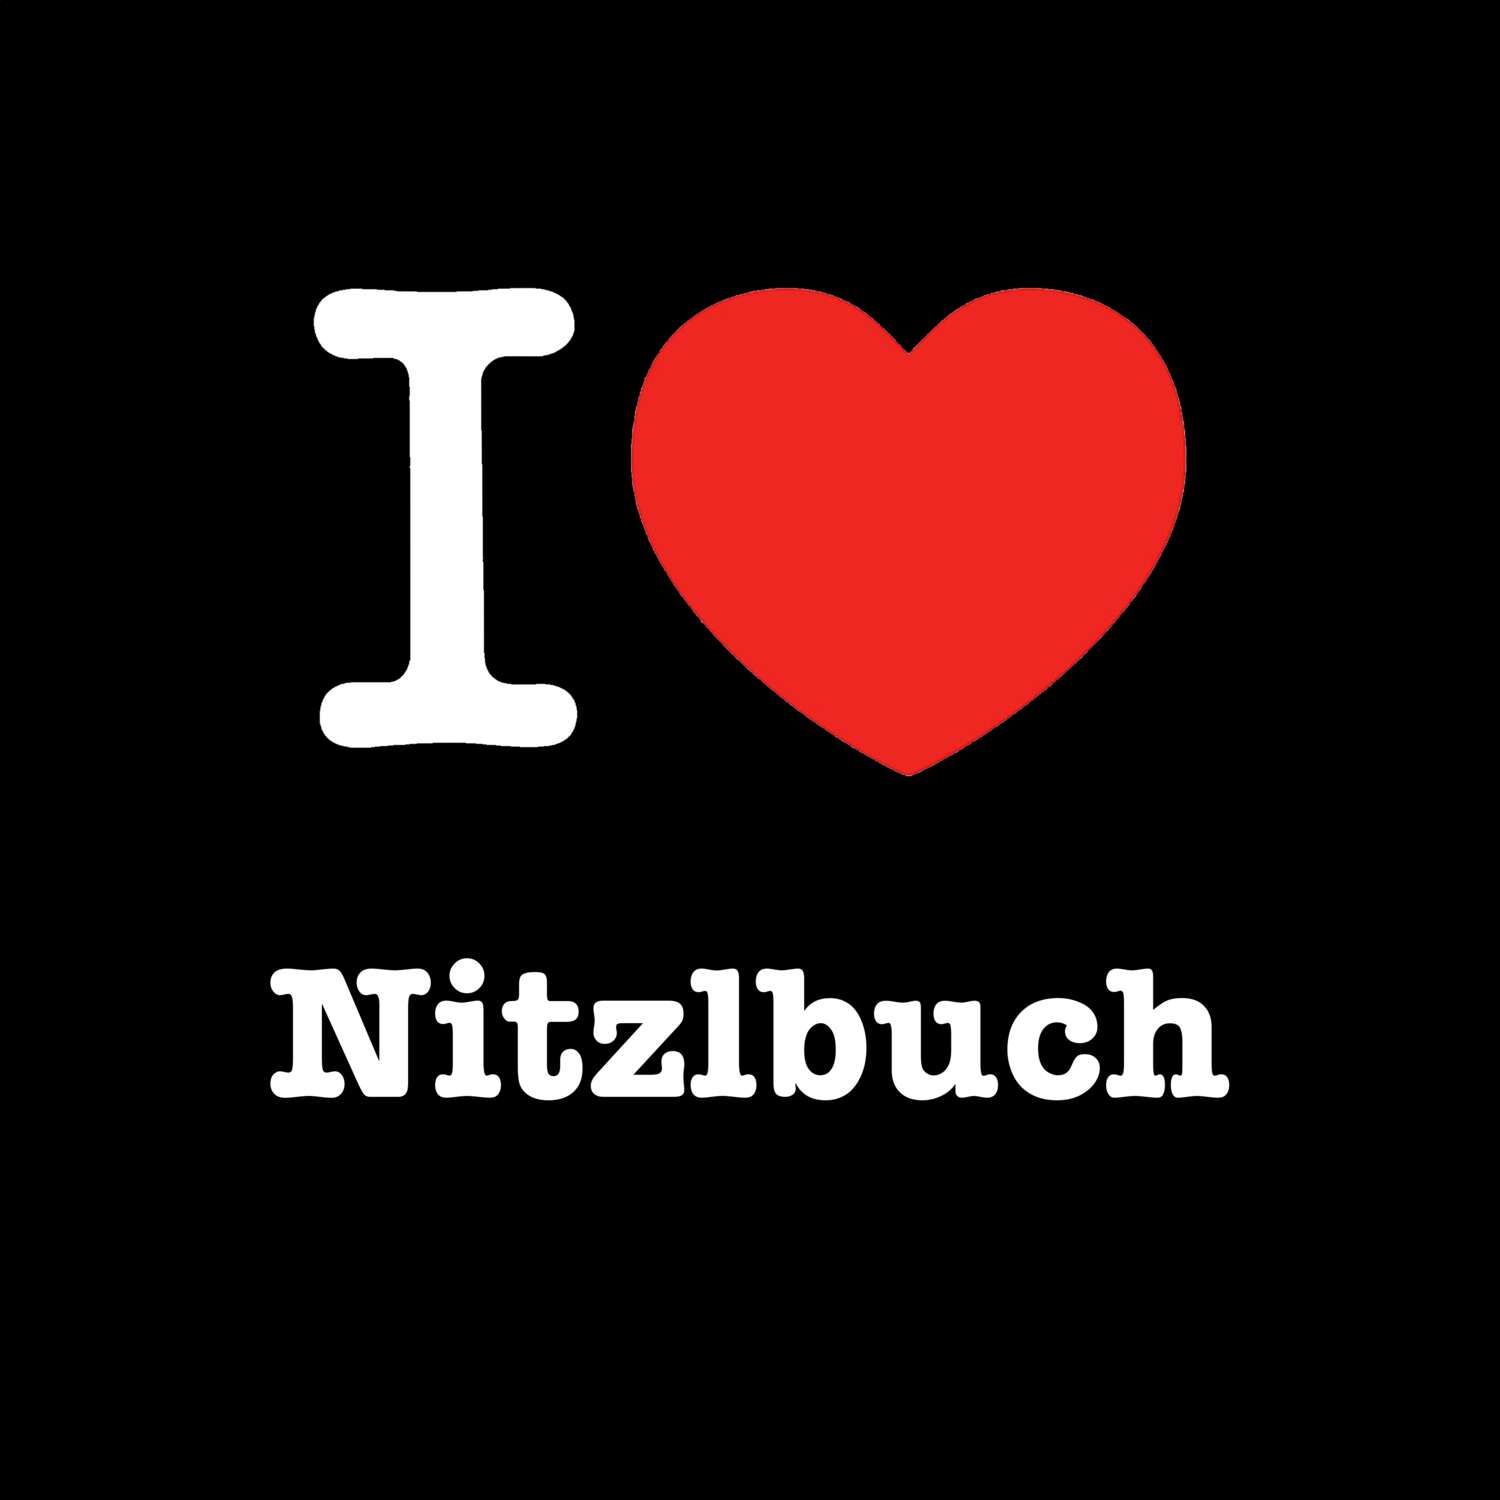 Nitzlbuch T-Shirt »I love«